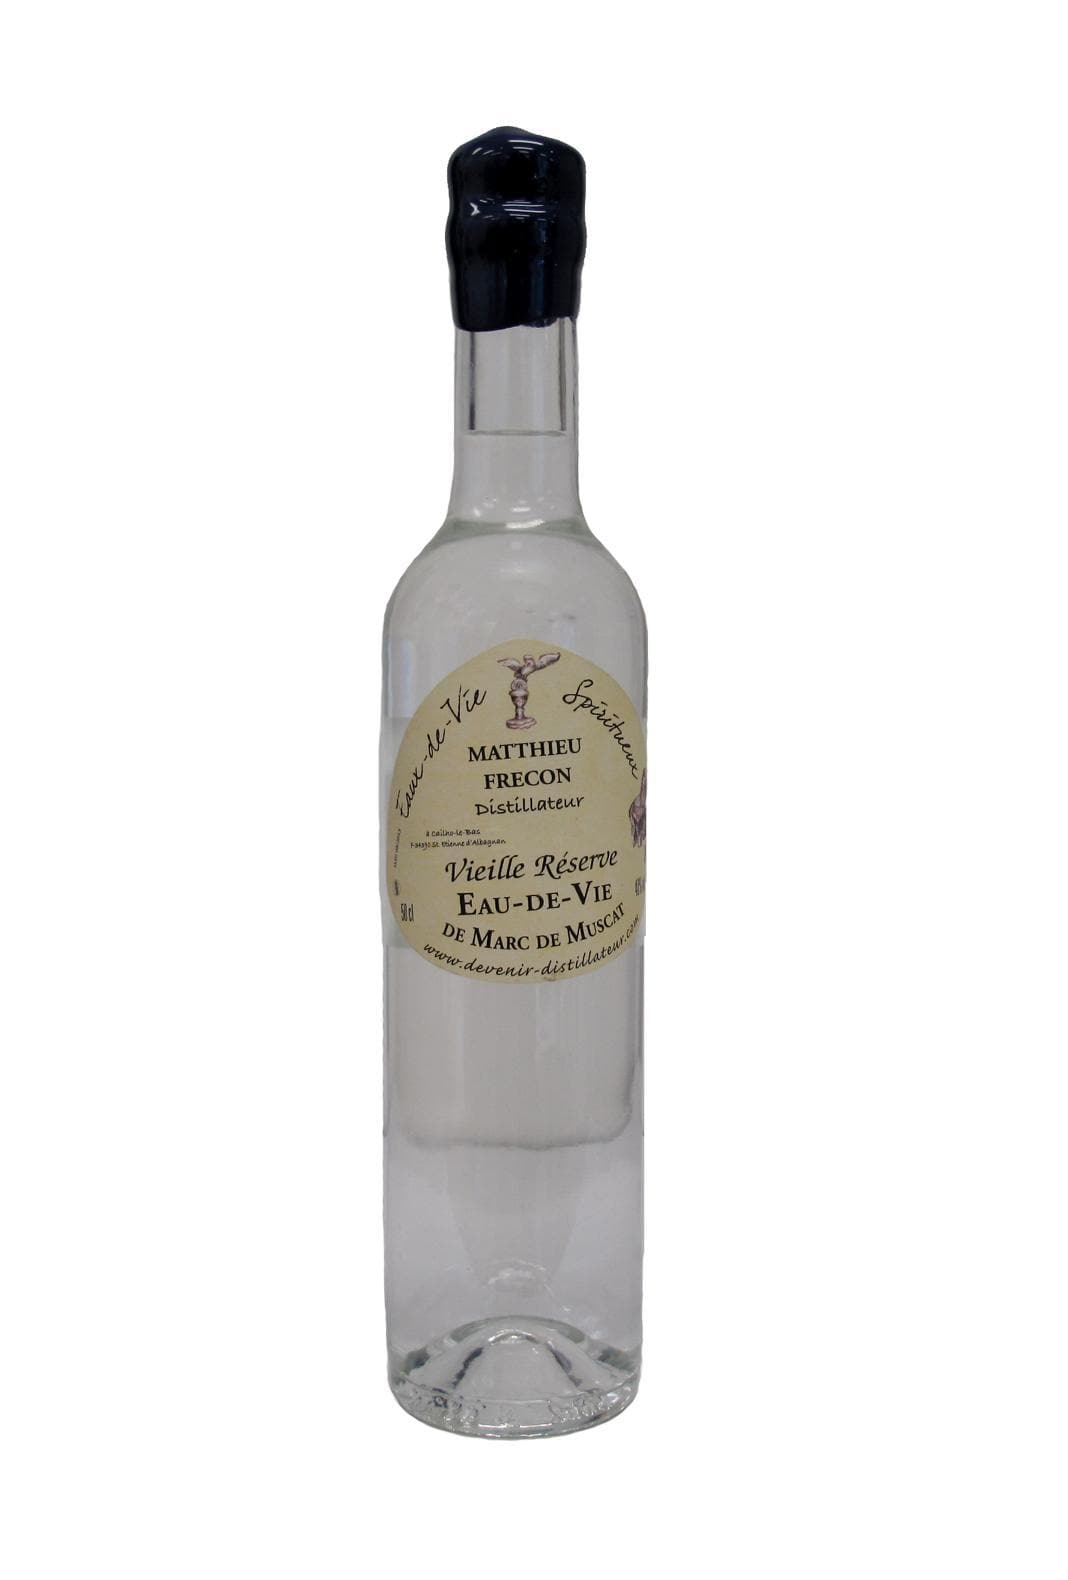 Bouilleur Marc de Muscat Vieille Reserve 40% 500ml | Liquor & Spirits | Shop online at Spirits of France